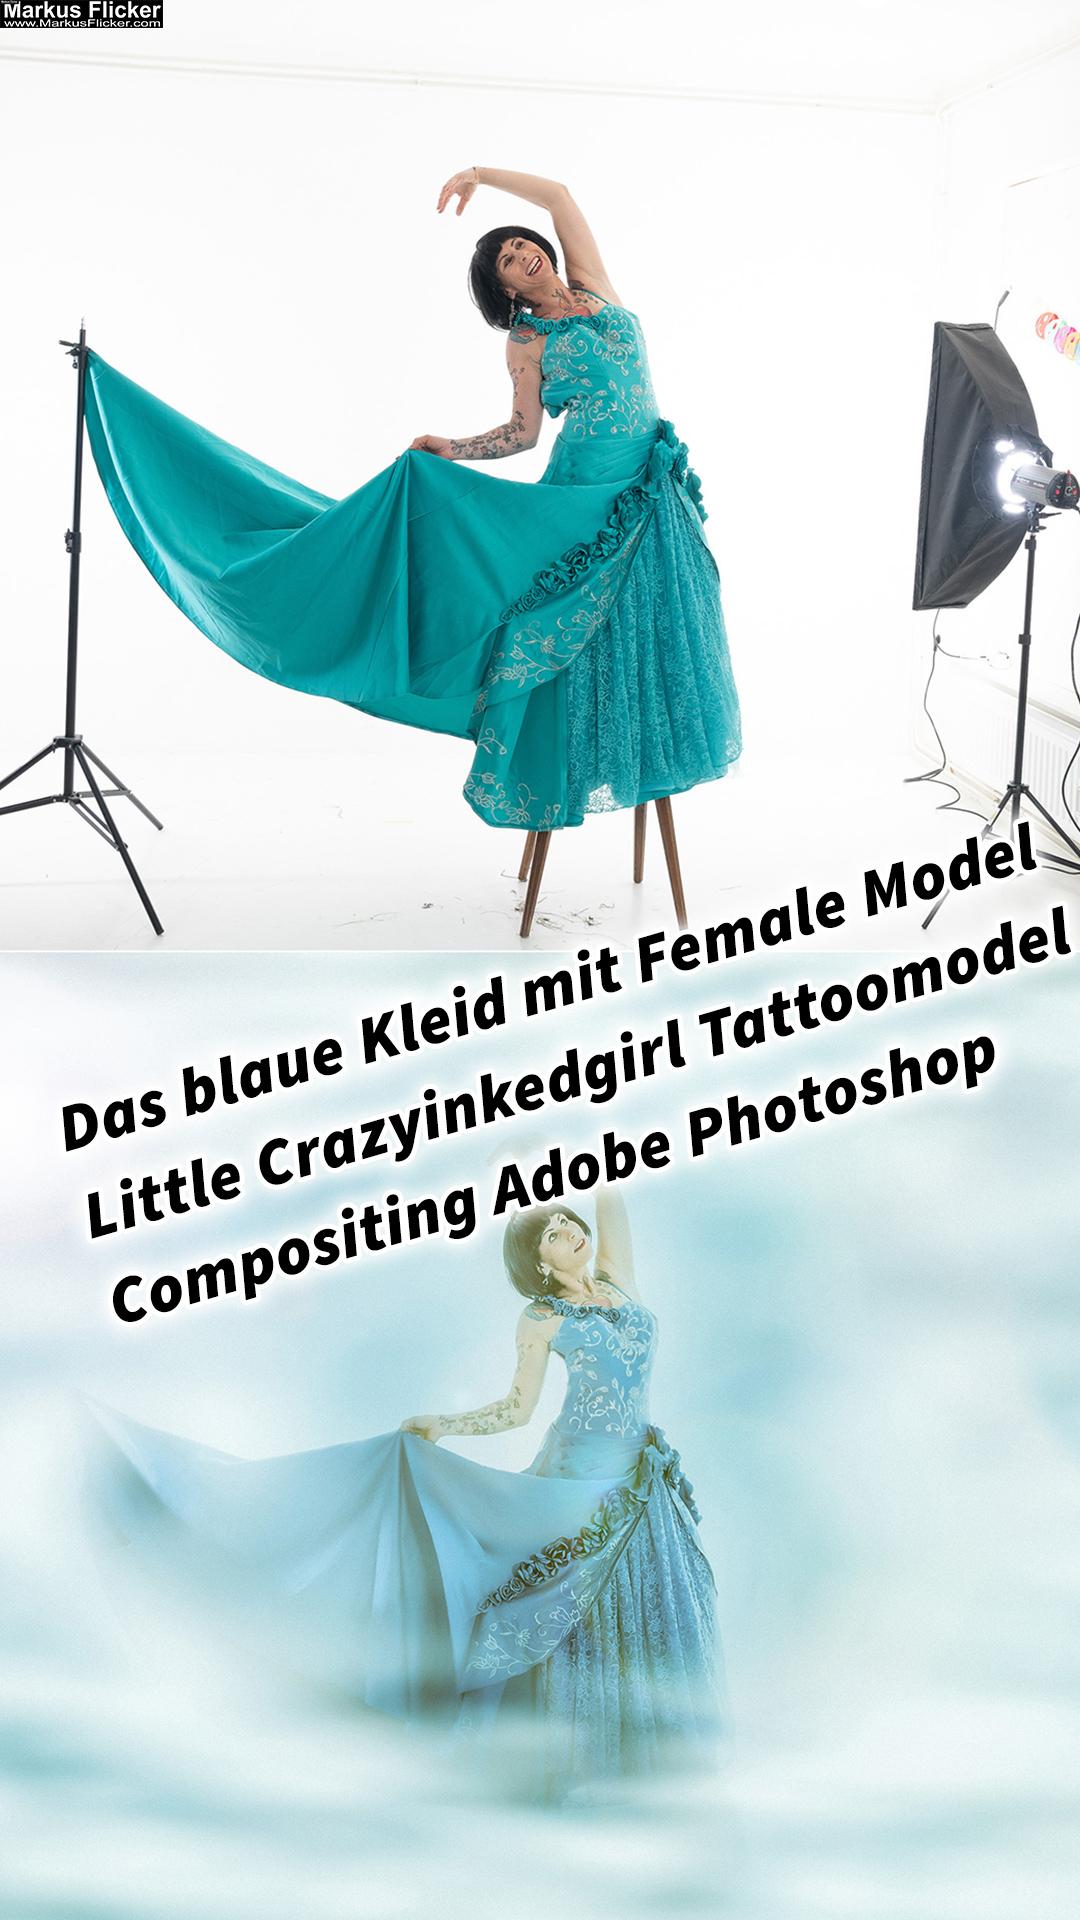 Das blaue Kleid mit Female Model Little Crazyinkedgirl Tattoomodel Compositing Adobe Photoshop